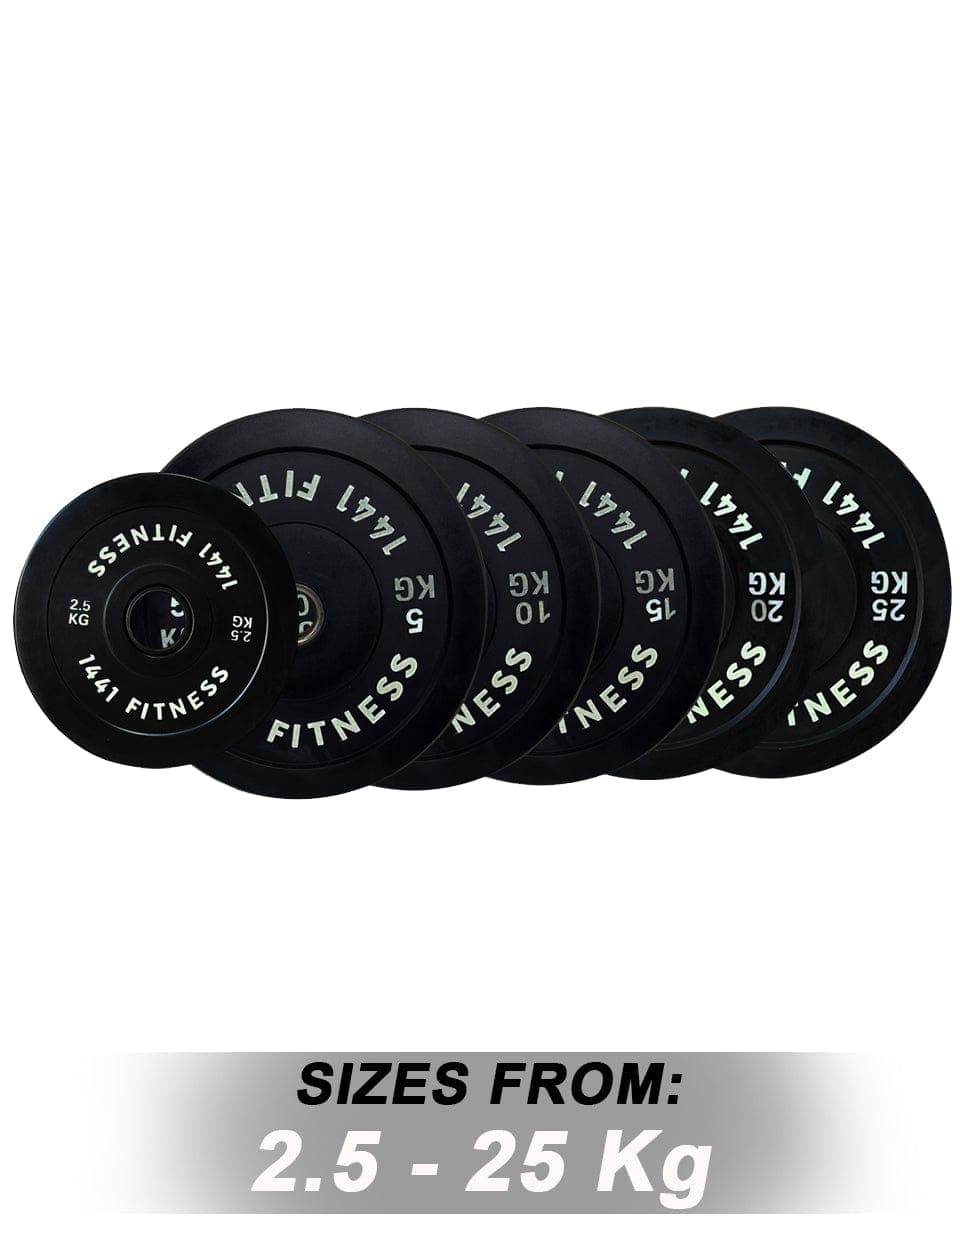 PRSAE Plates & Bars 1441 Fitness Black Rubber Bumper Plates - 2.5 to 25 KG | Per Piece